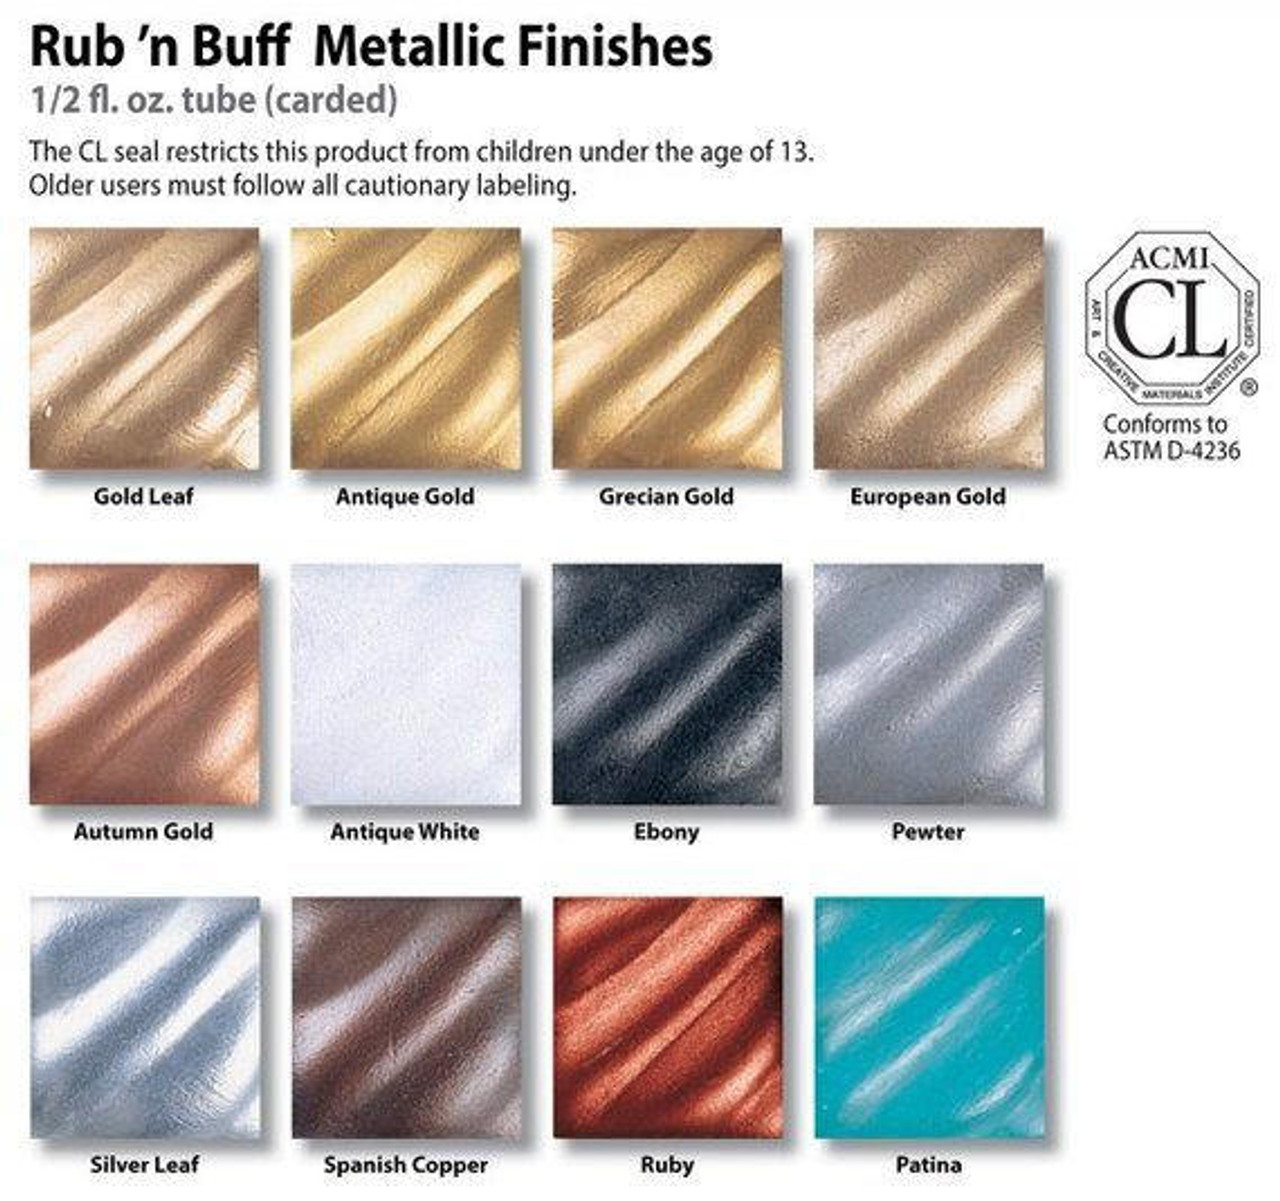 AMACO Rub n Buff Wax Metallic Finish 9 Color Kit - Antique Gold